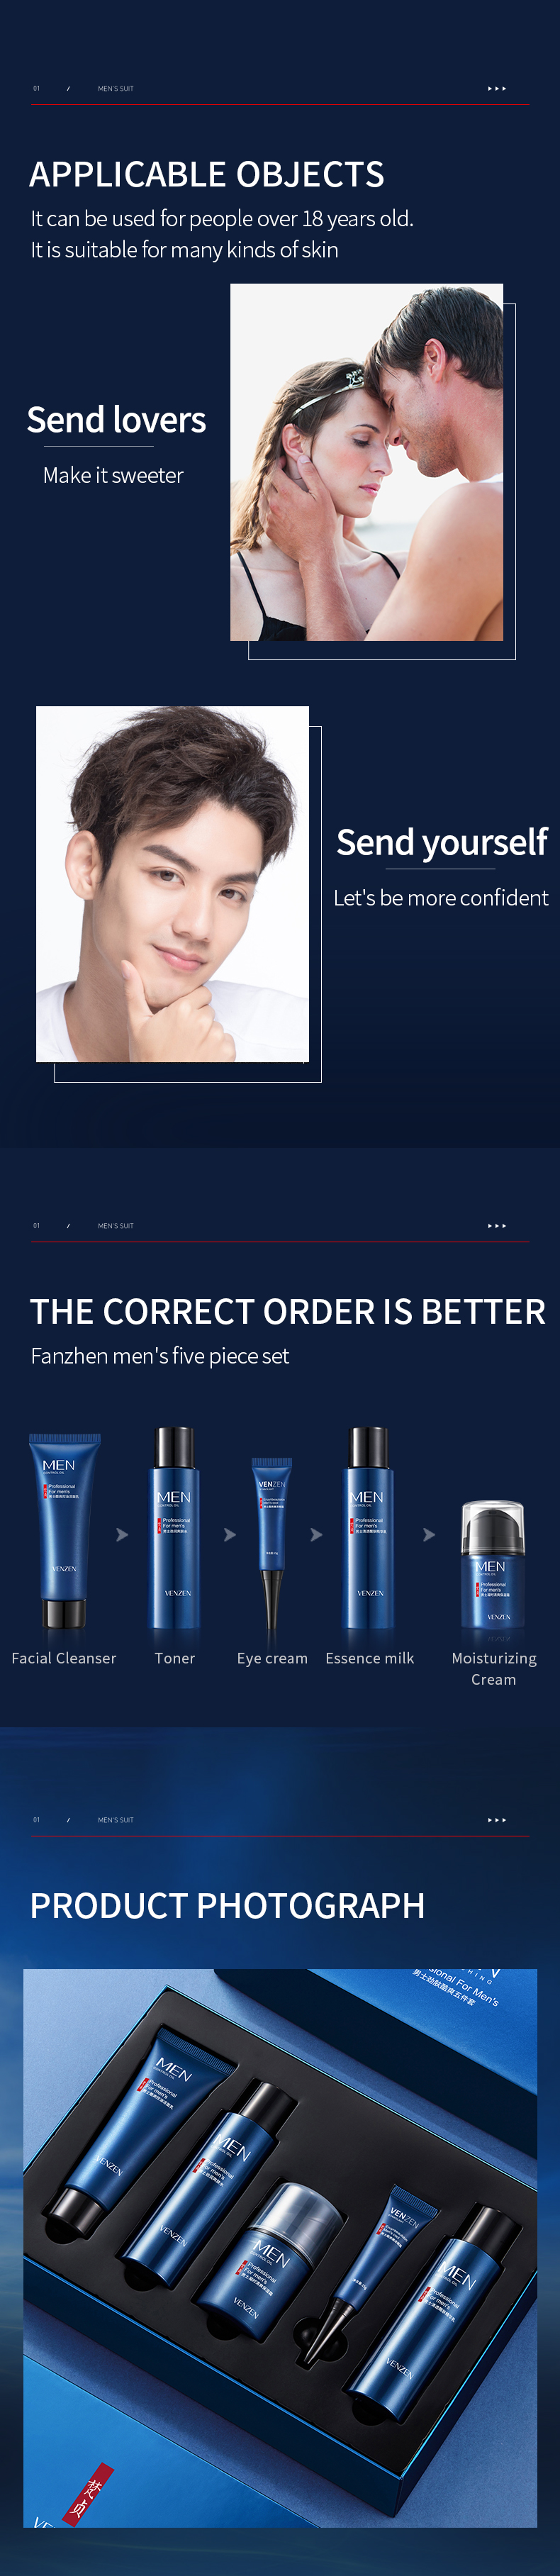 Men's skin care set